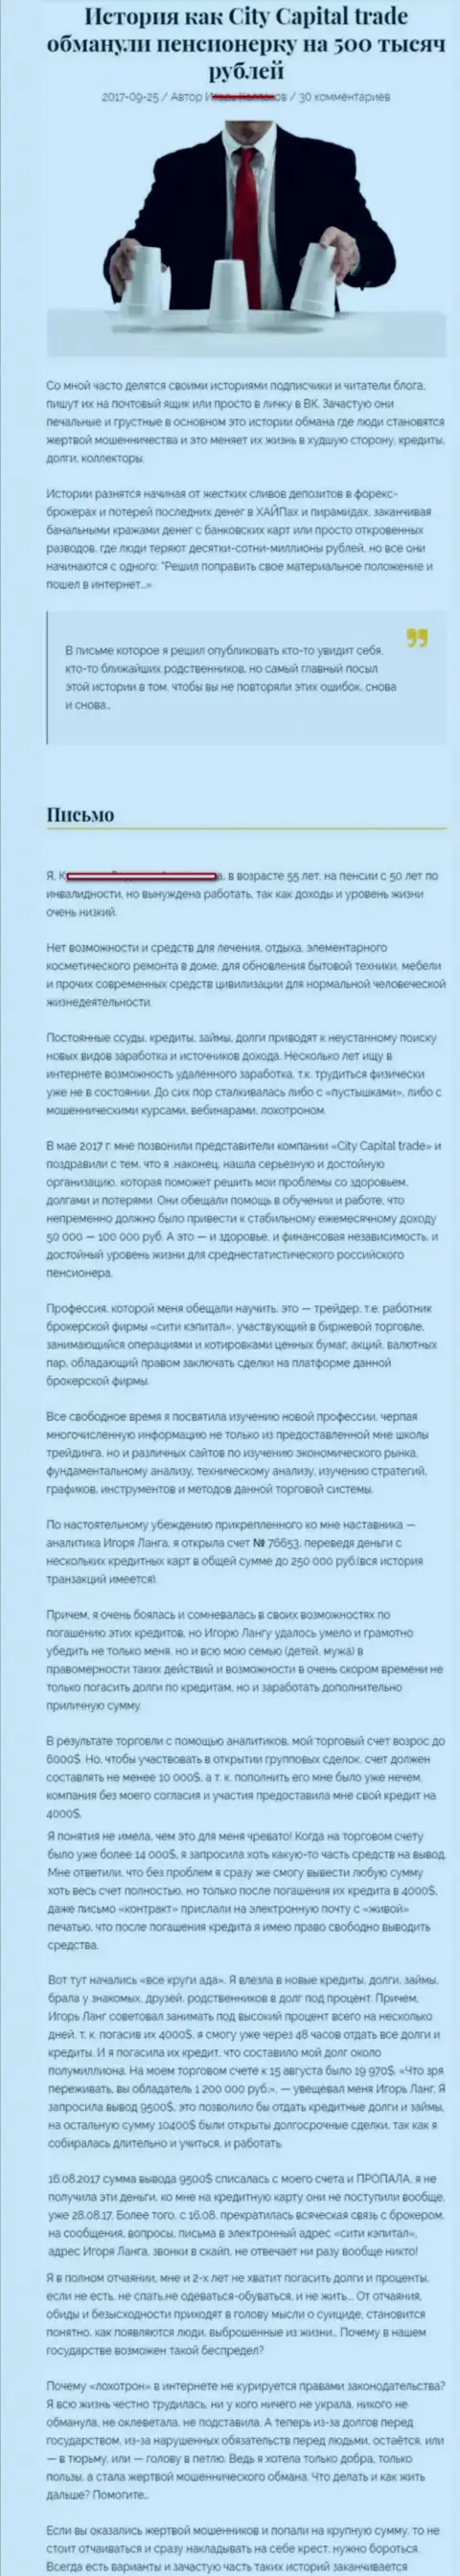 СитиКапитал Трейд обворовали клиентку пенсионного возраста - инвалида на общую сумму пятьсот тыс. рублей - МОШЕННИКИ !!!